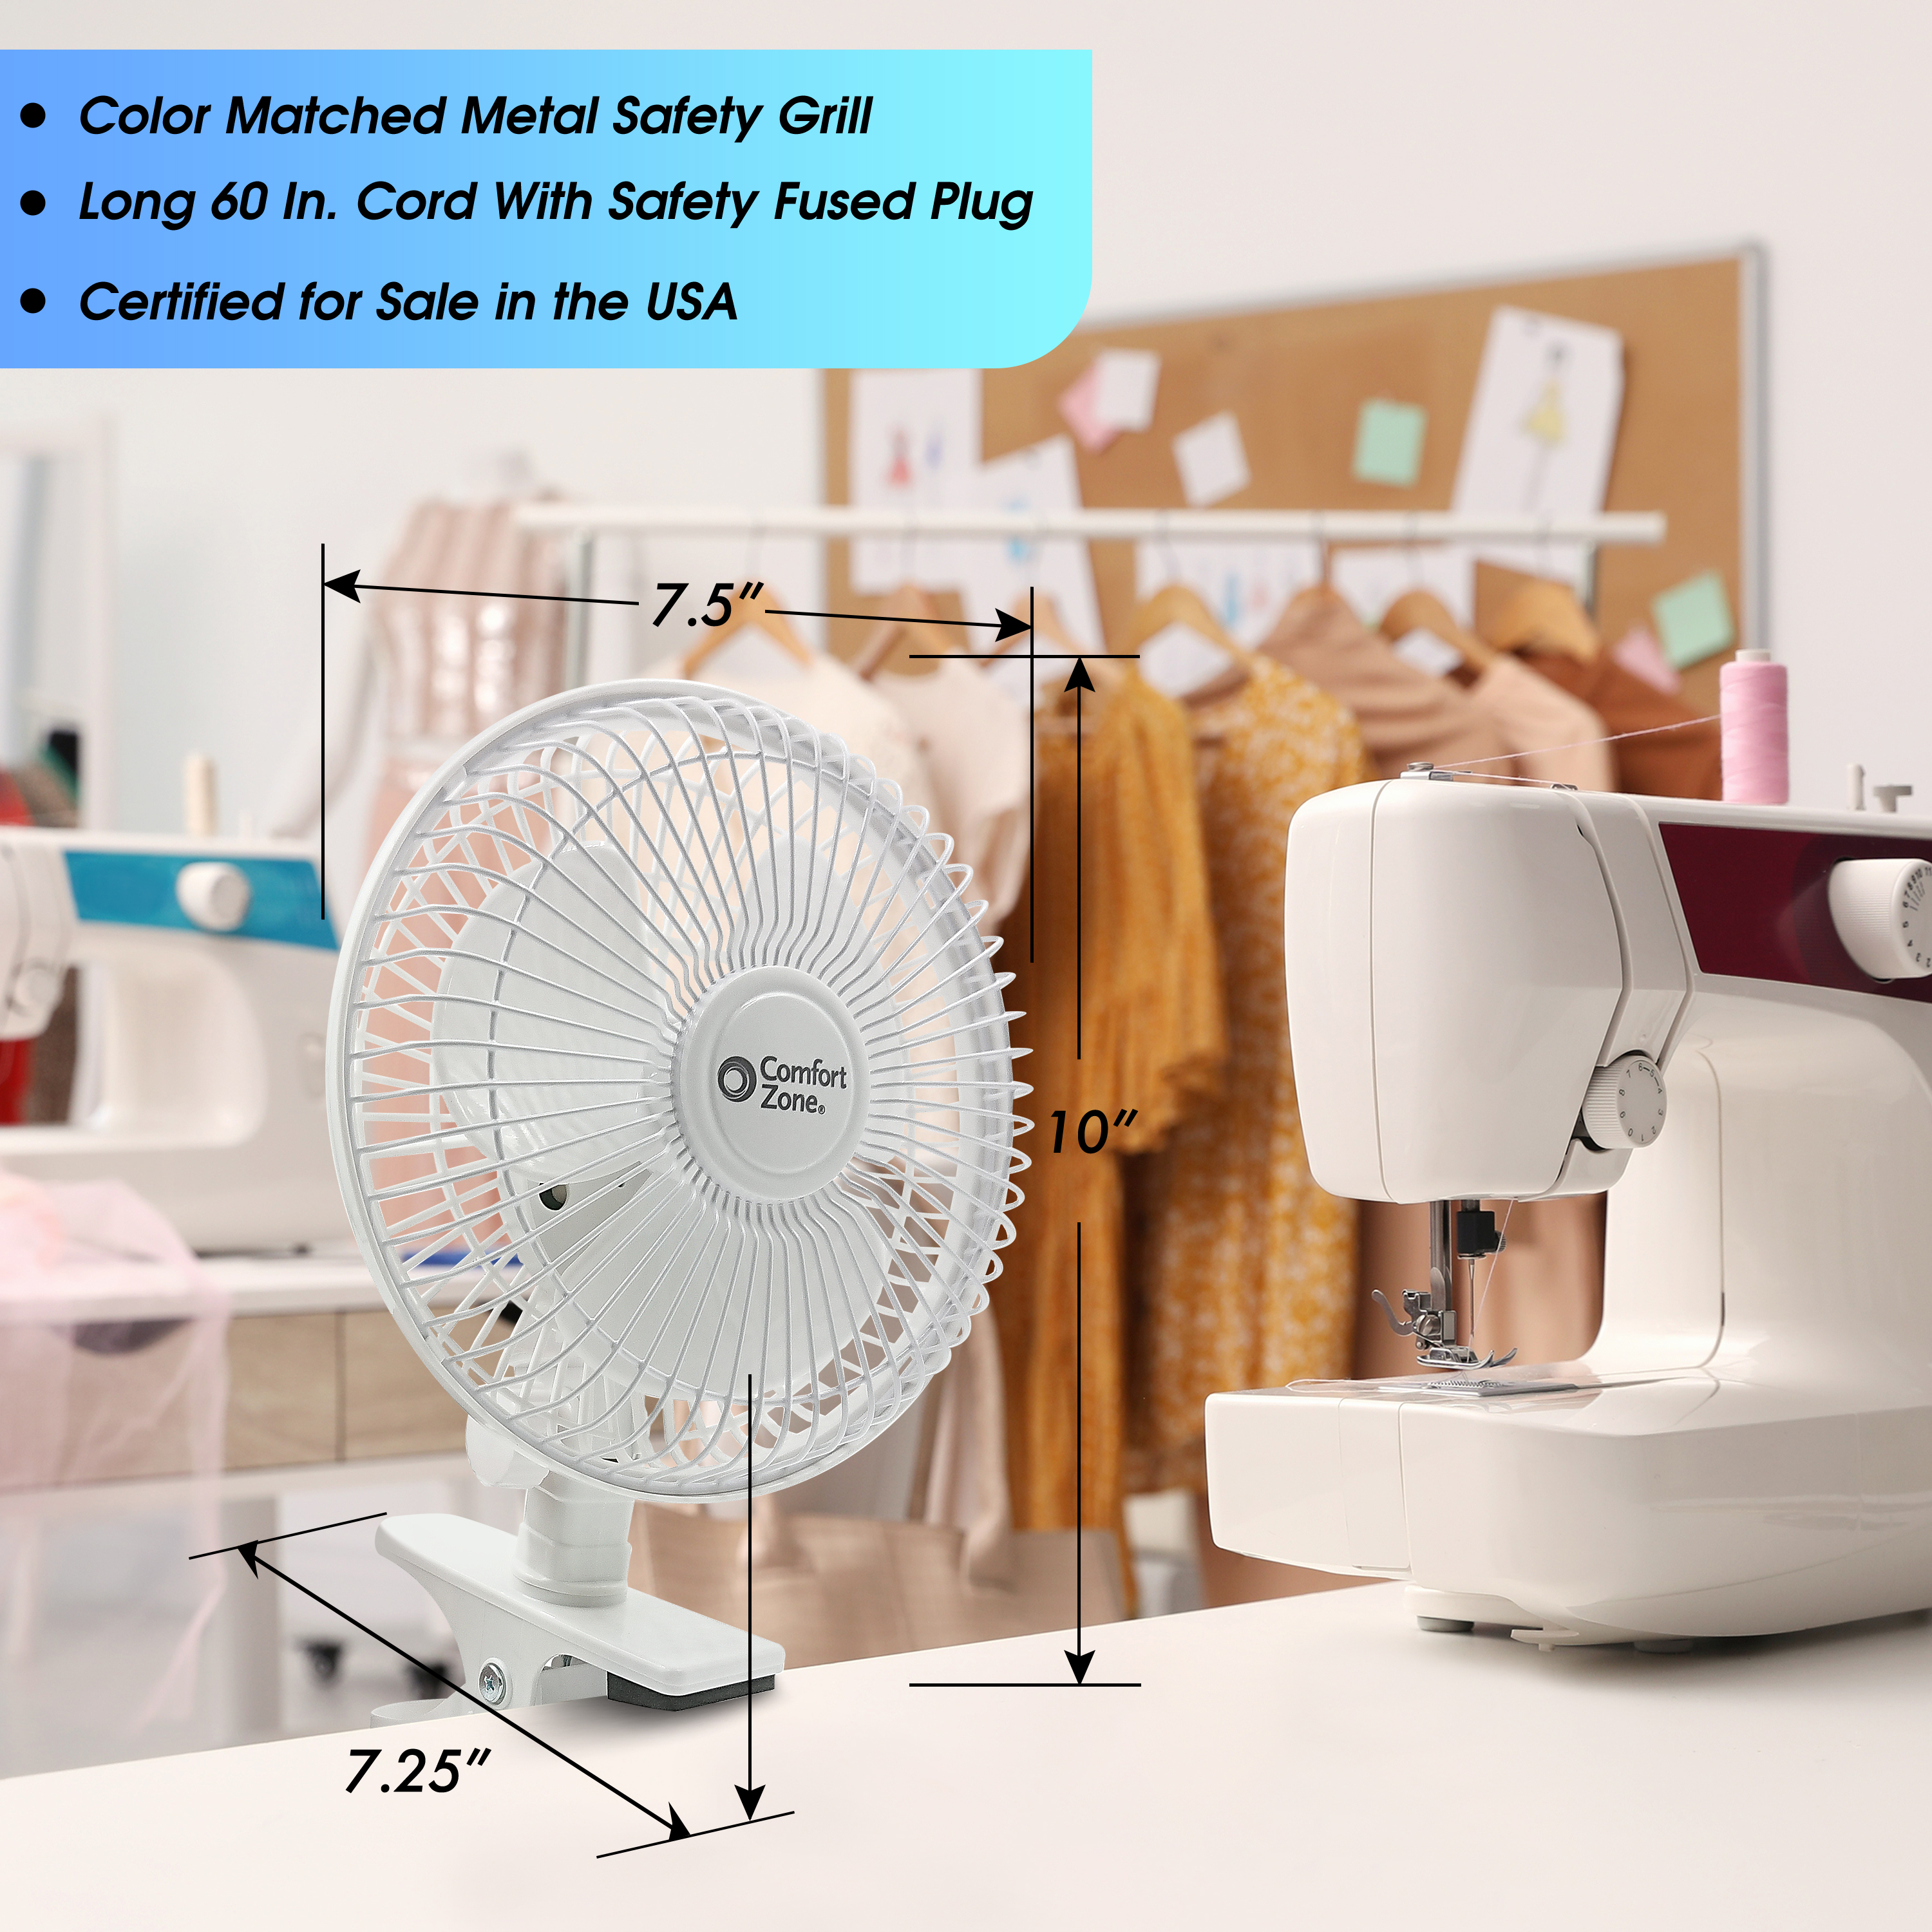 Comfort Zone 6" 2-Speed Portable, Indoor Desk Fan W/Clip, Adjustable Tilt, Rotates 360, White - image 5 of 7